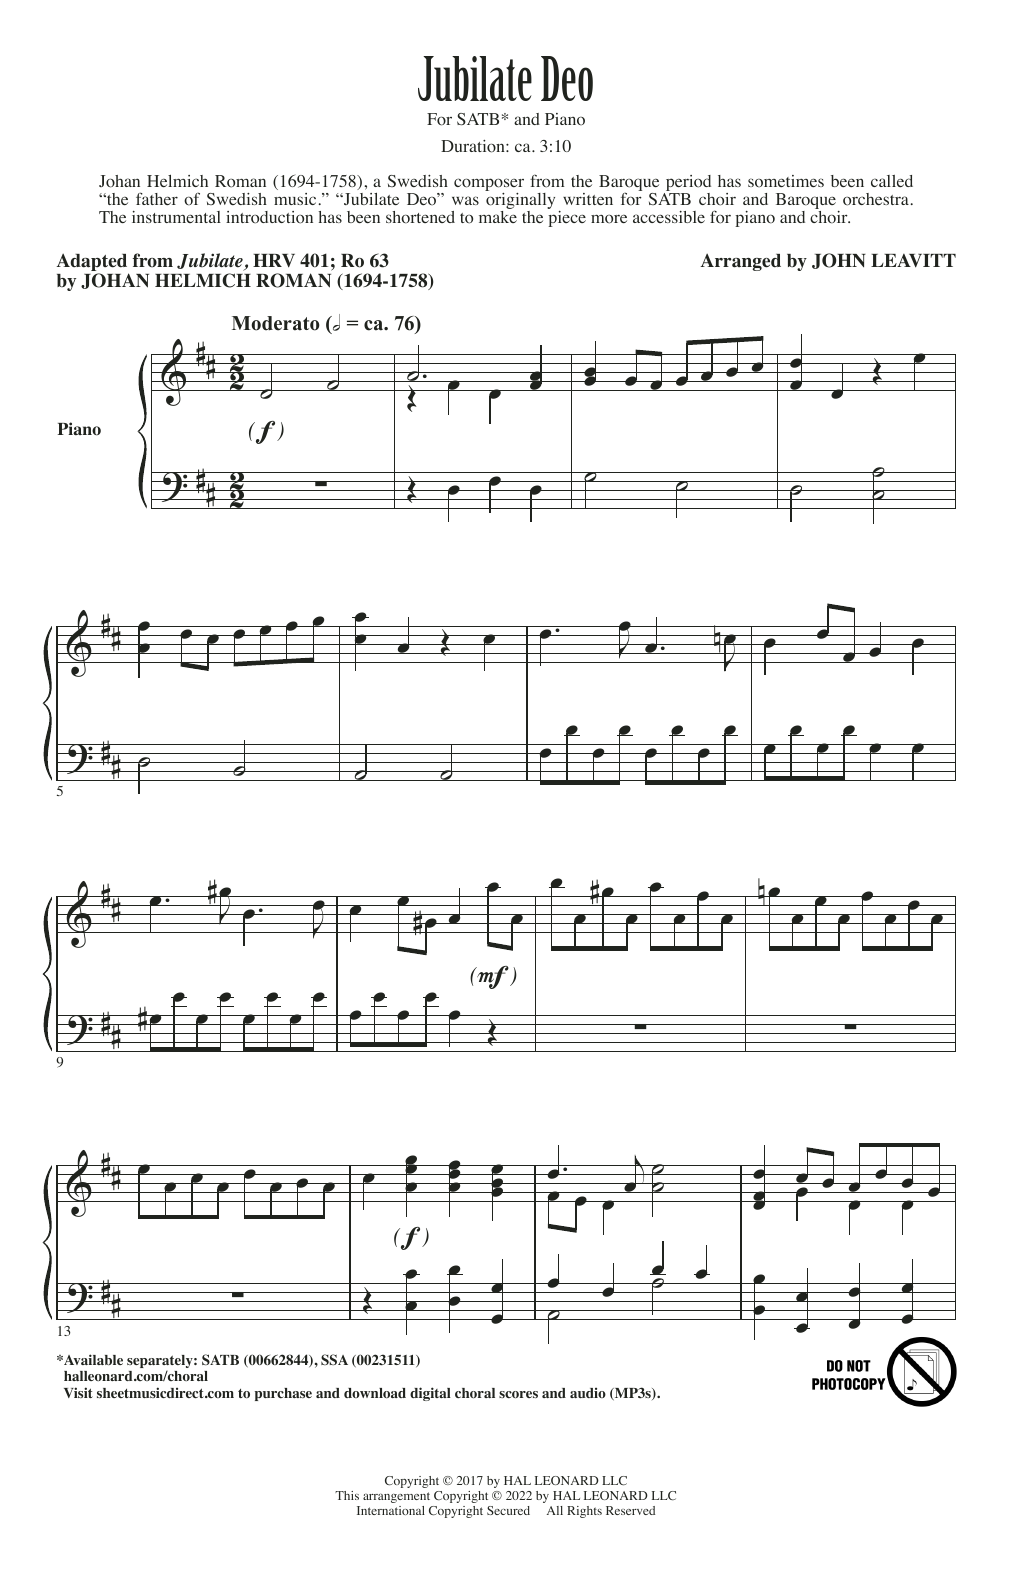 Download Johan Helmich Roman Jubilate Deo (arr. John Leavitt) Sheet Music and learn how to play SATB Choir PDF digital score in minutes